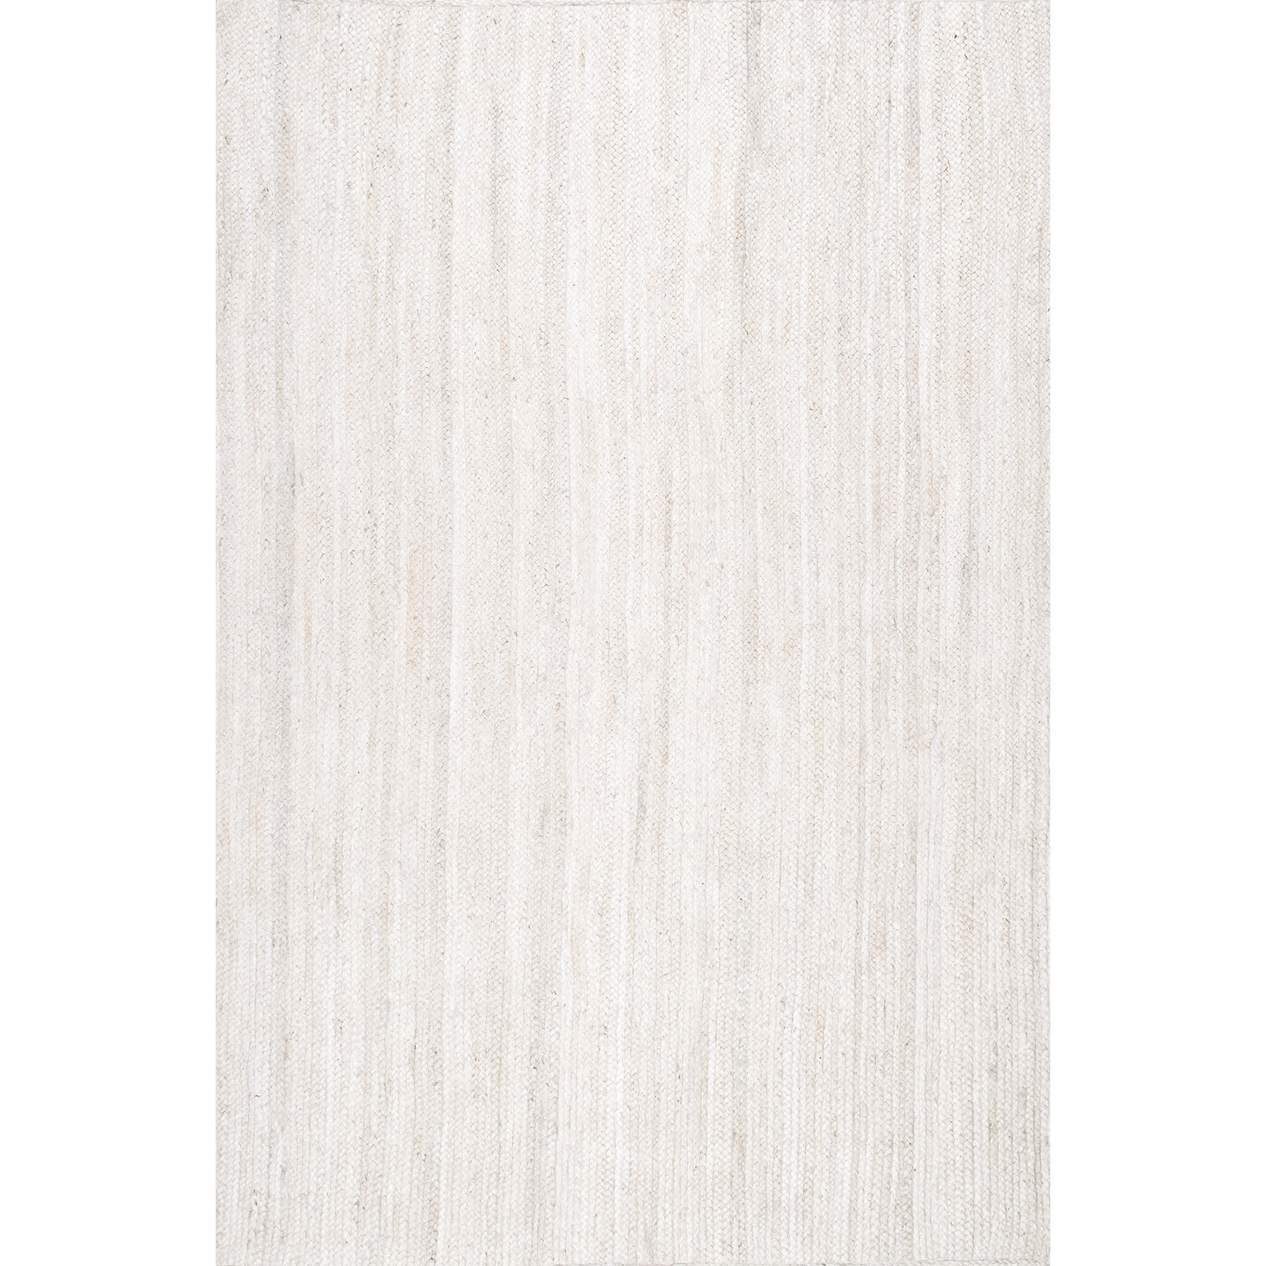 Hand Woven Rigo Jute rug Area Rug, White, 8x10 - Image 1